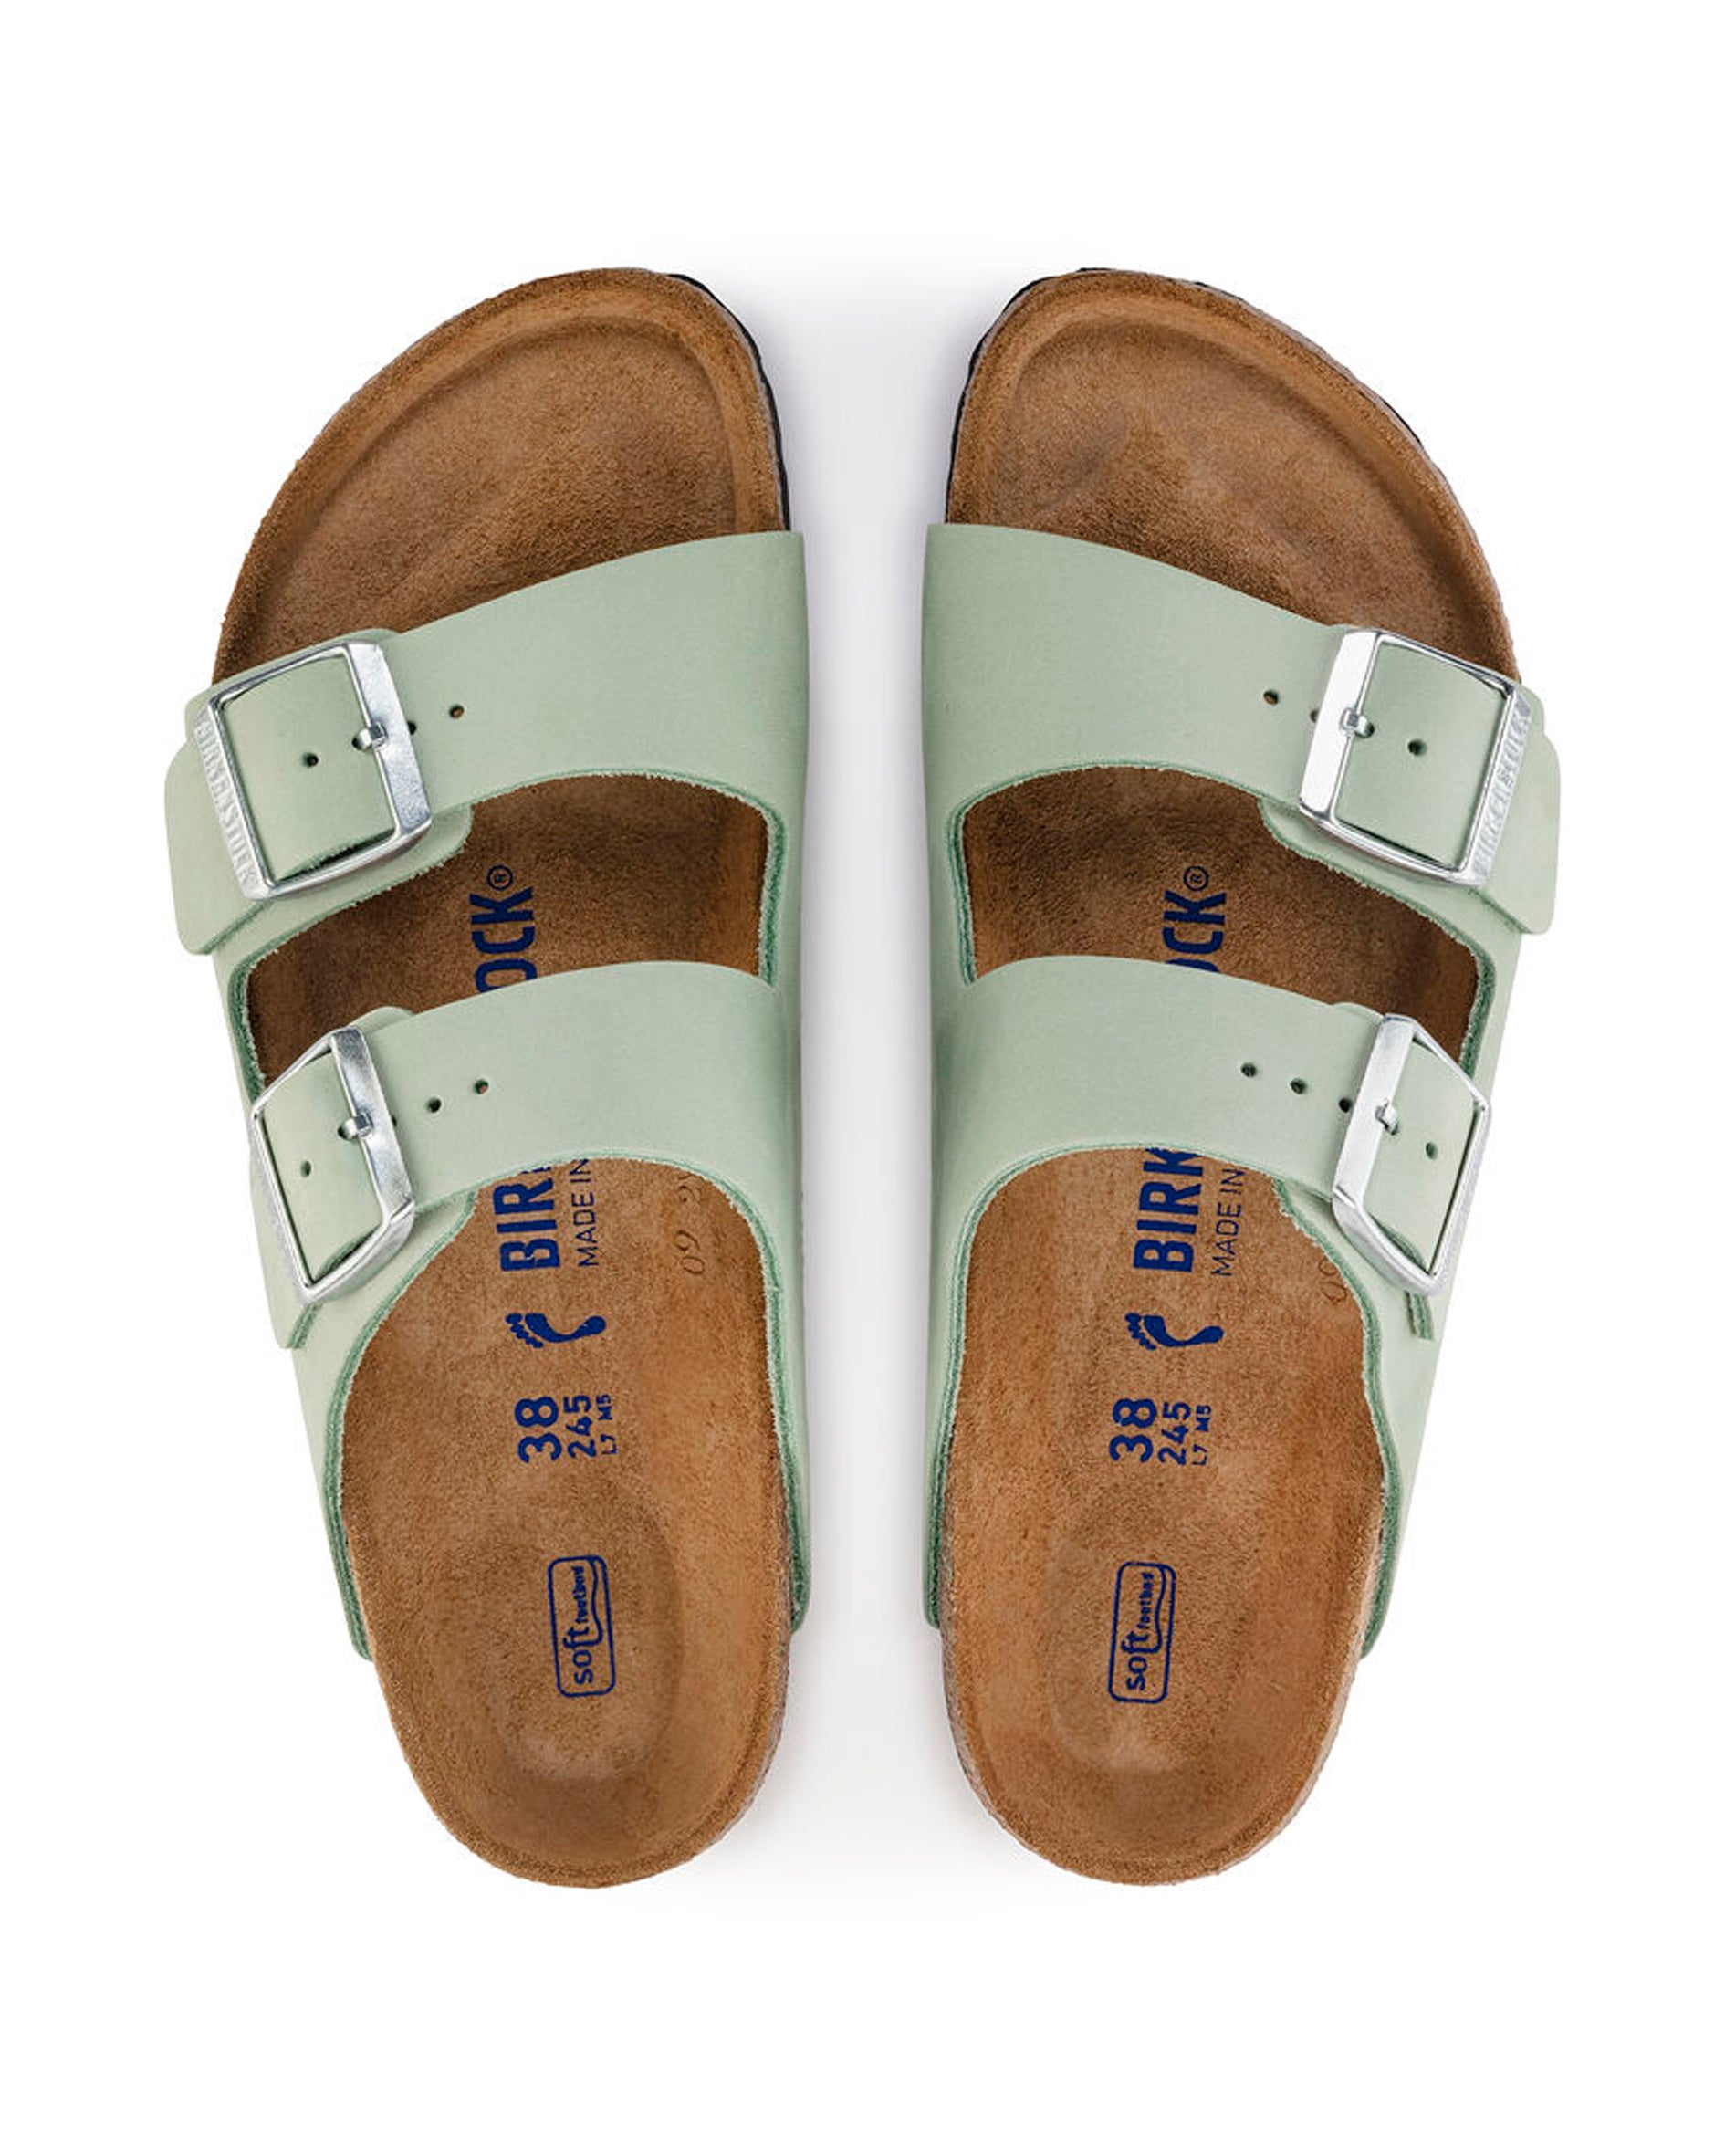 Arizona Soft Footbed Matcha Nubuck Leather Sandals